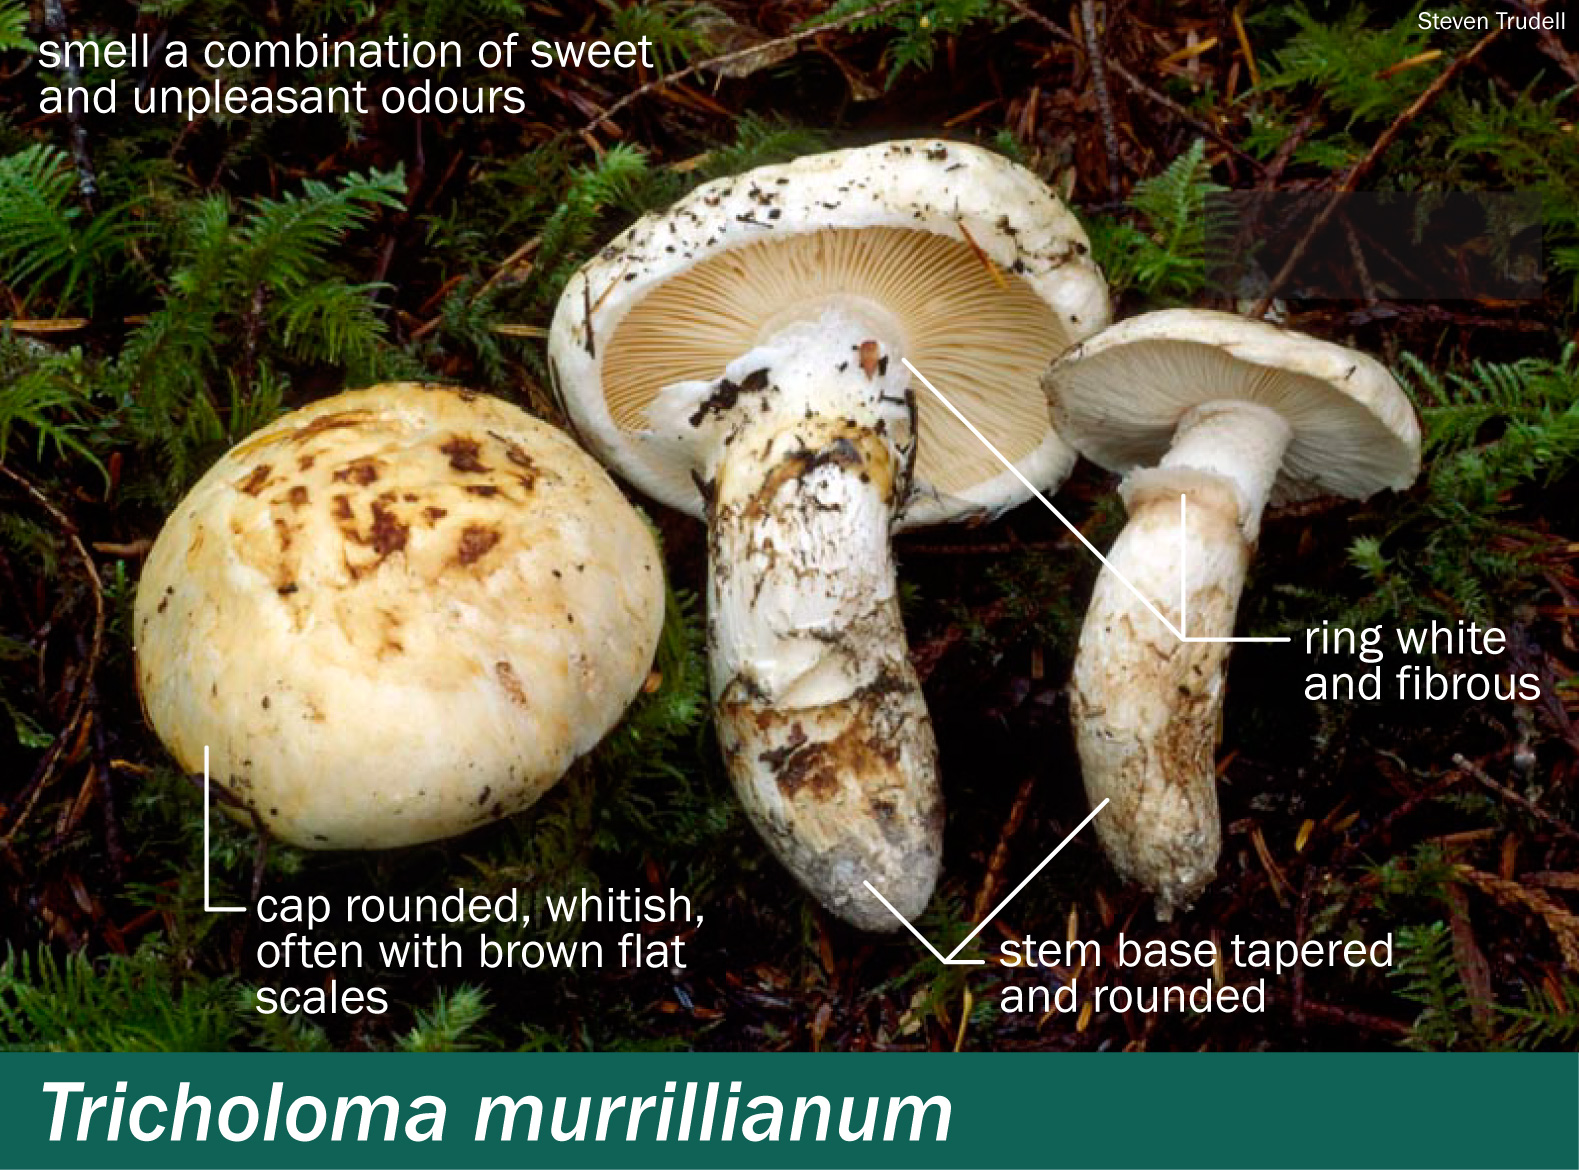 Mushroom and Fungi Treasures of Southern Africa - Pine Ring (underside)  .... Lactarius delicious. | Facebook